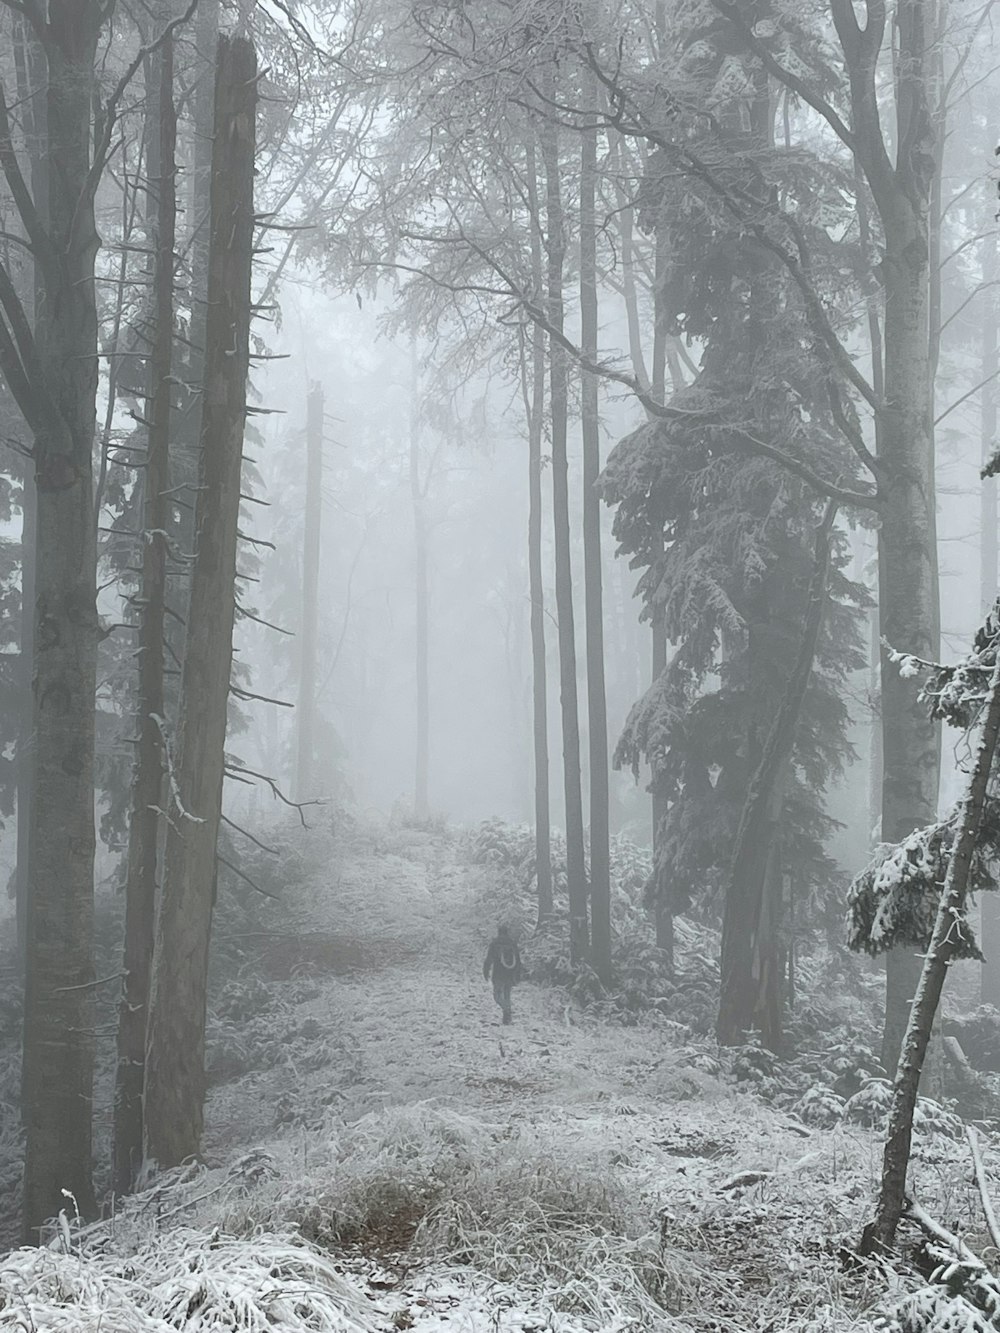 a dog walking through a forest